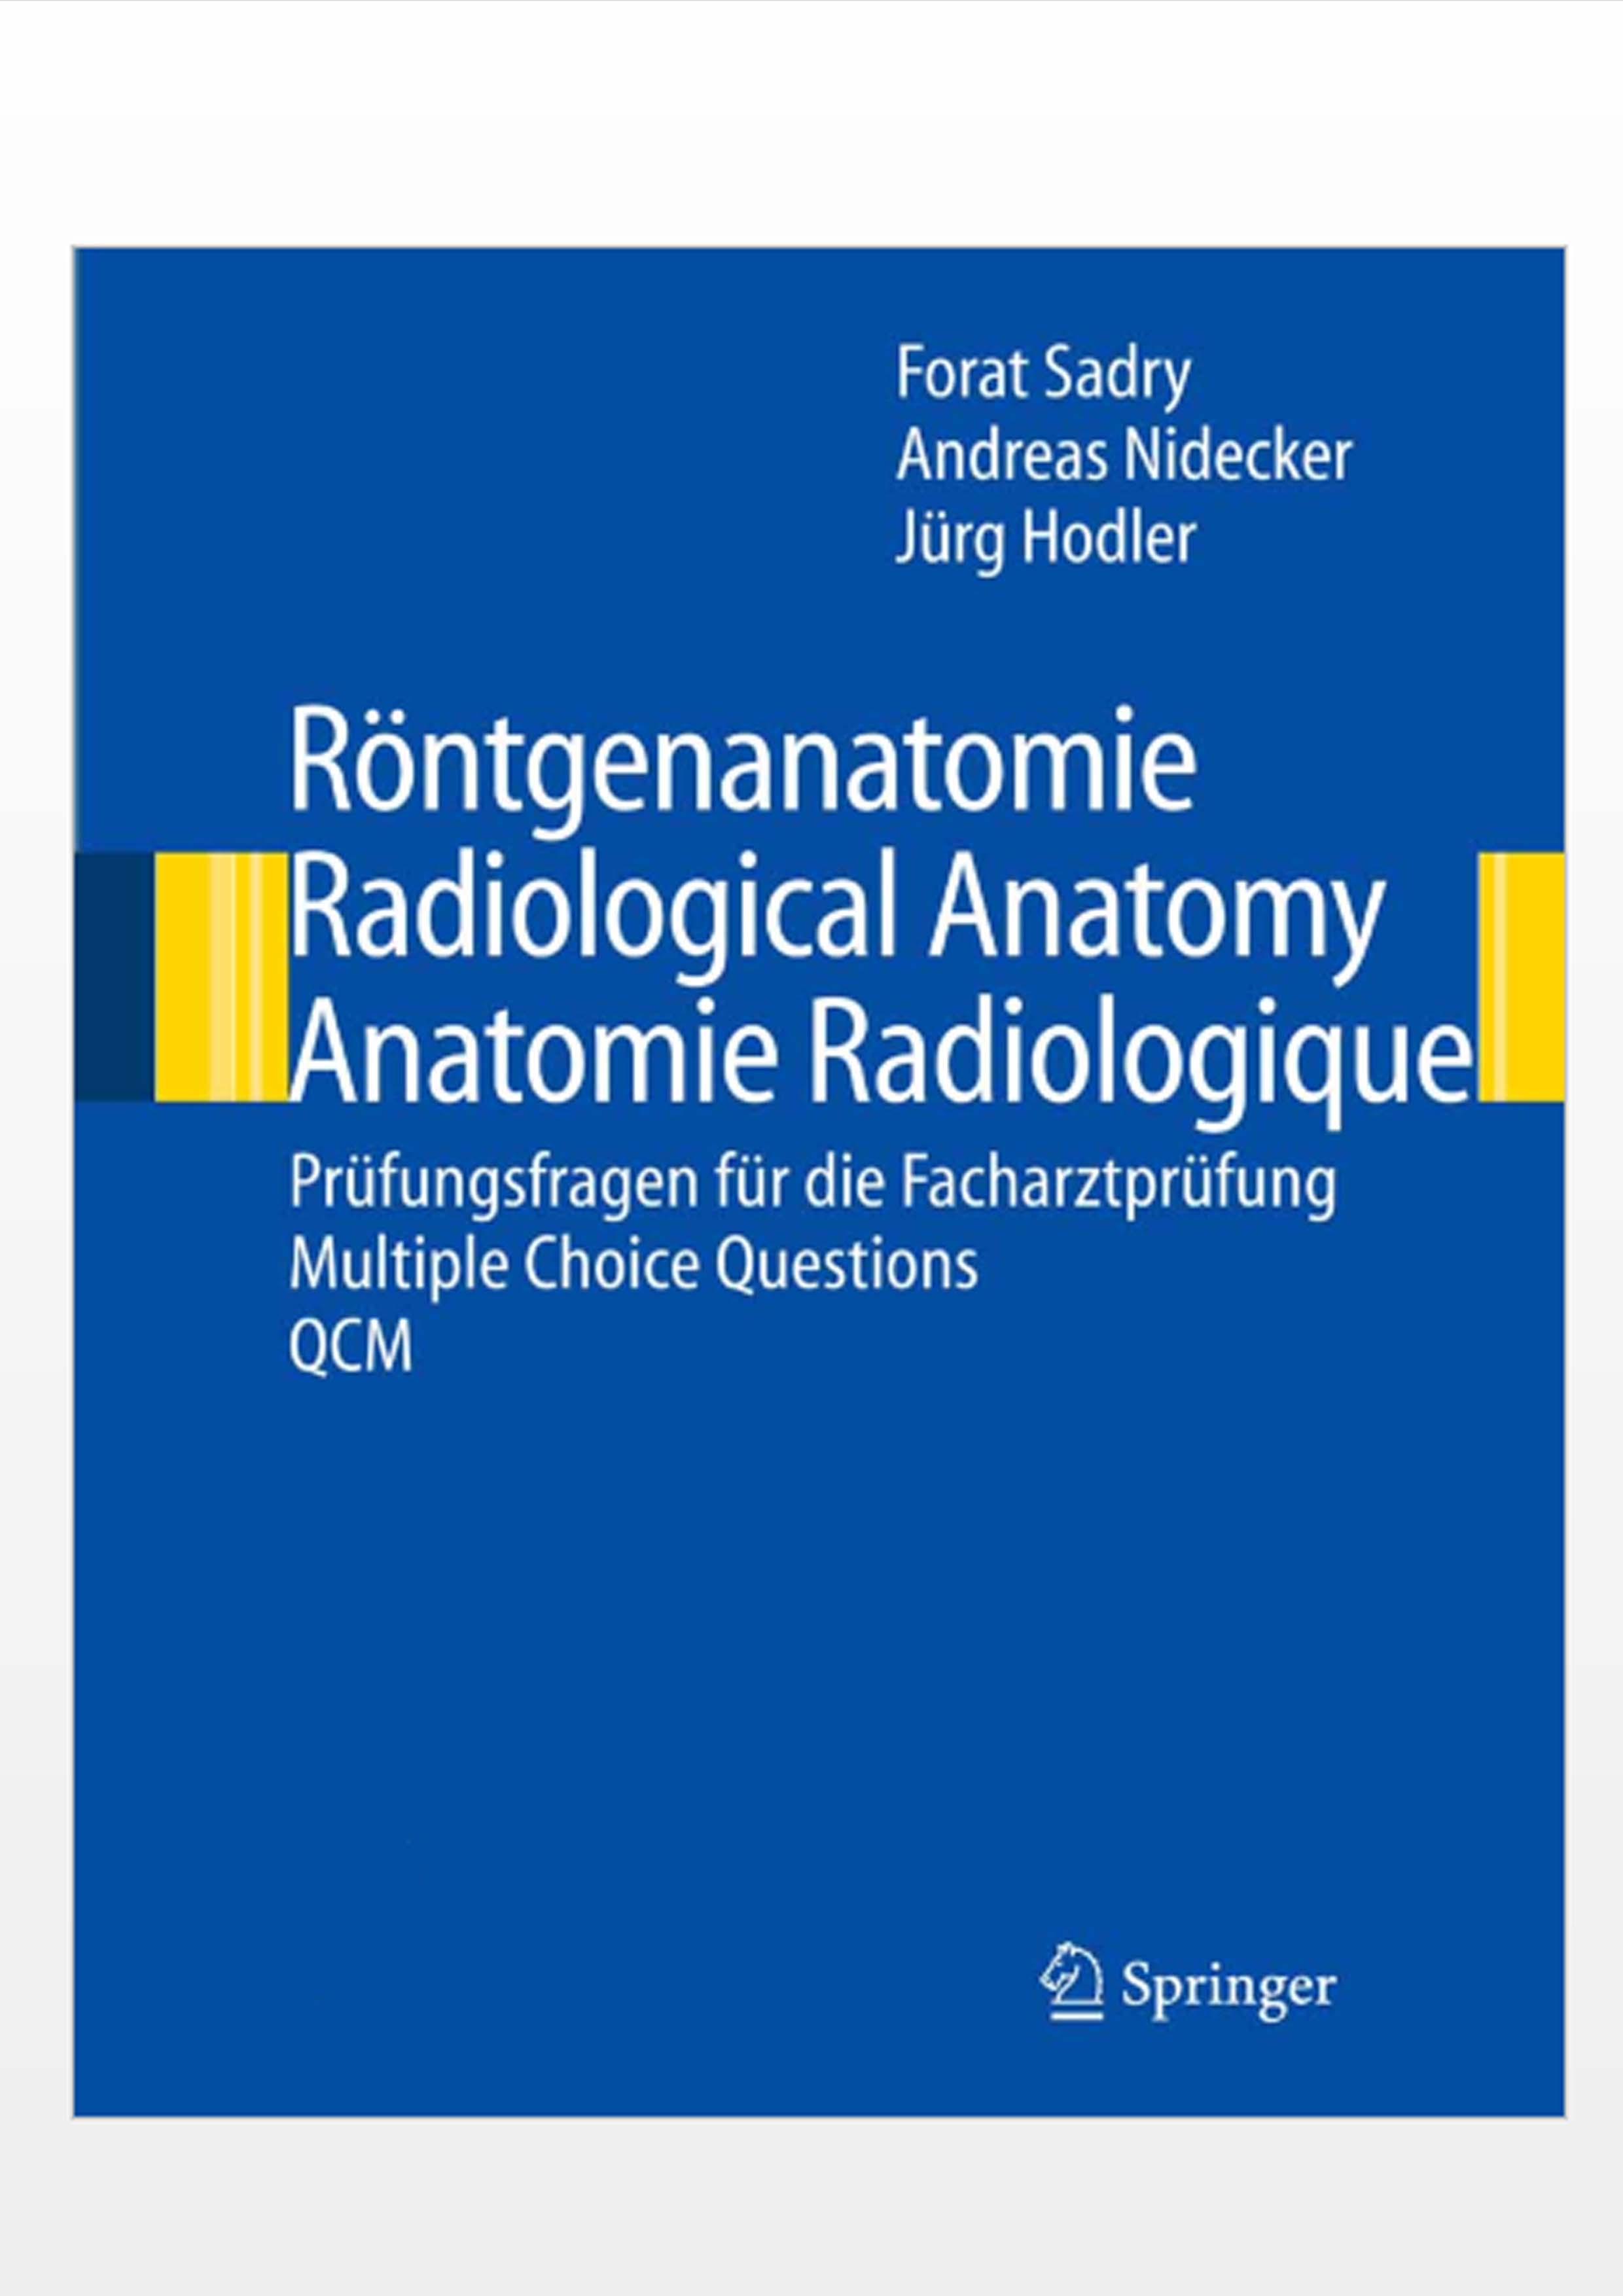 Sadry - Radiological Anatomy - Multiple Choice Questions